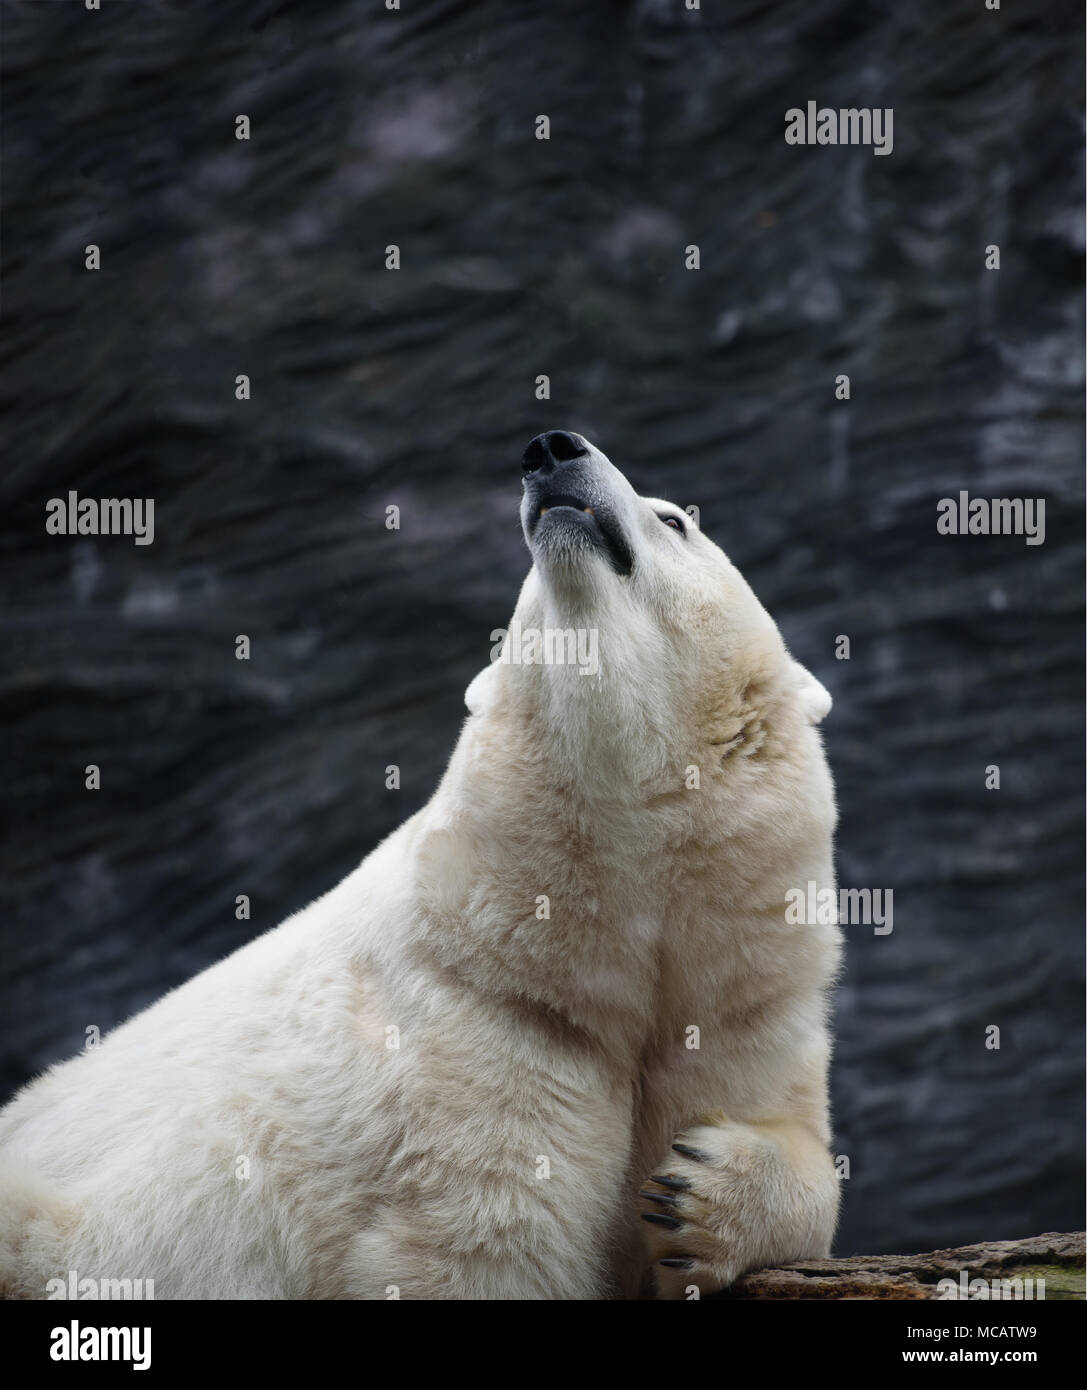 Polar bear looks up over abstract dark background Stock Photo